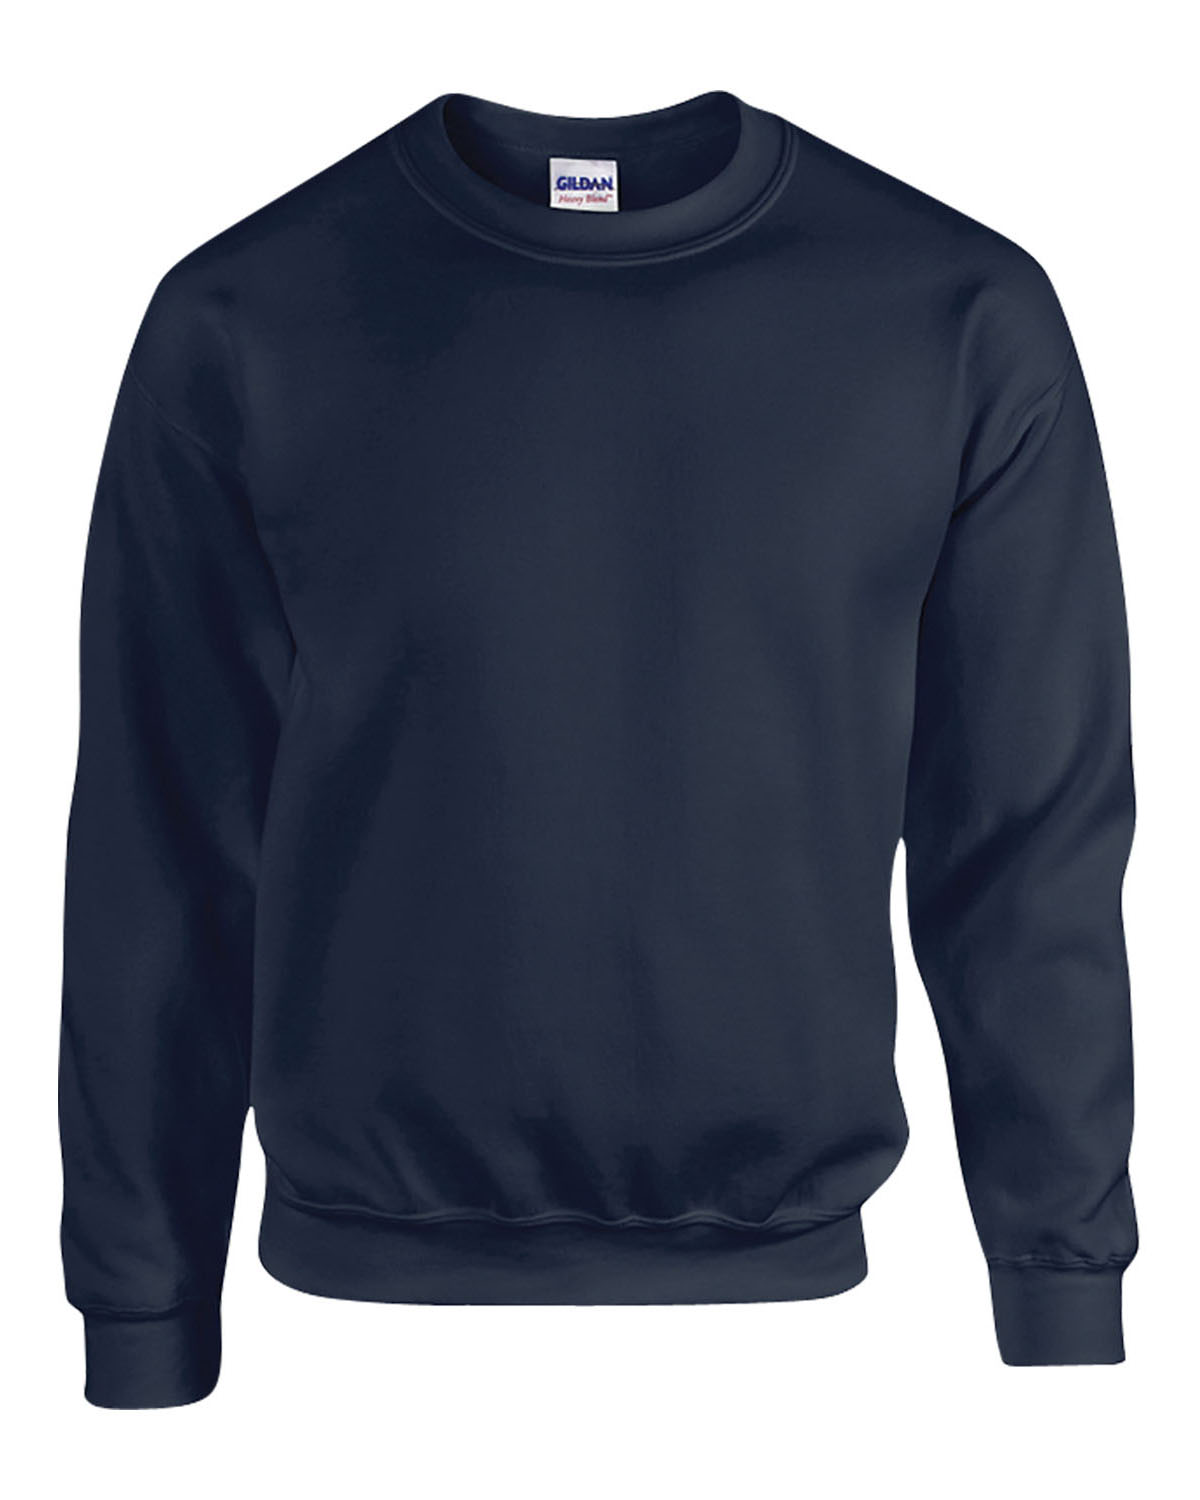 Gildan G180 Adult Crewneck Sweatshirt, Wholesale